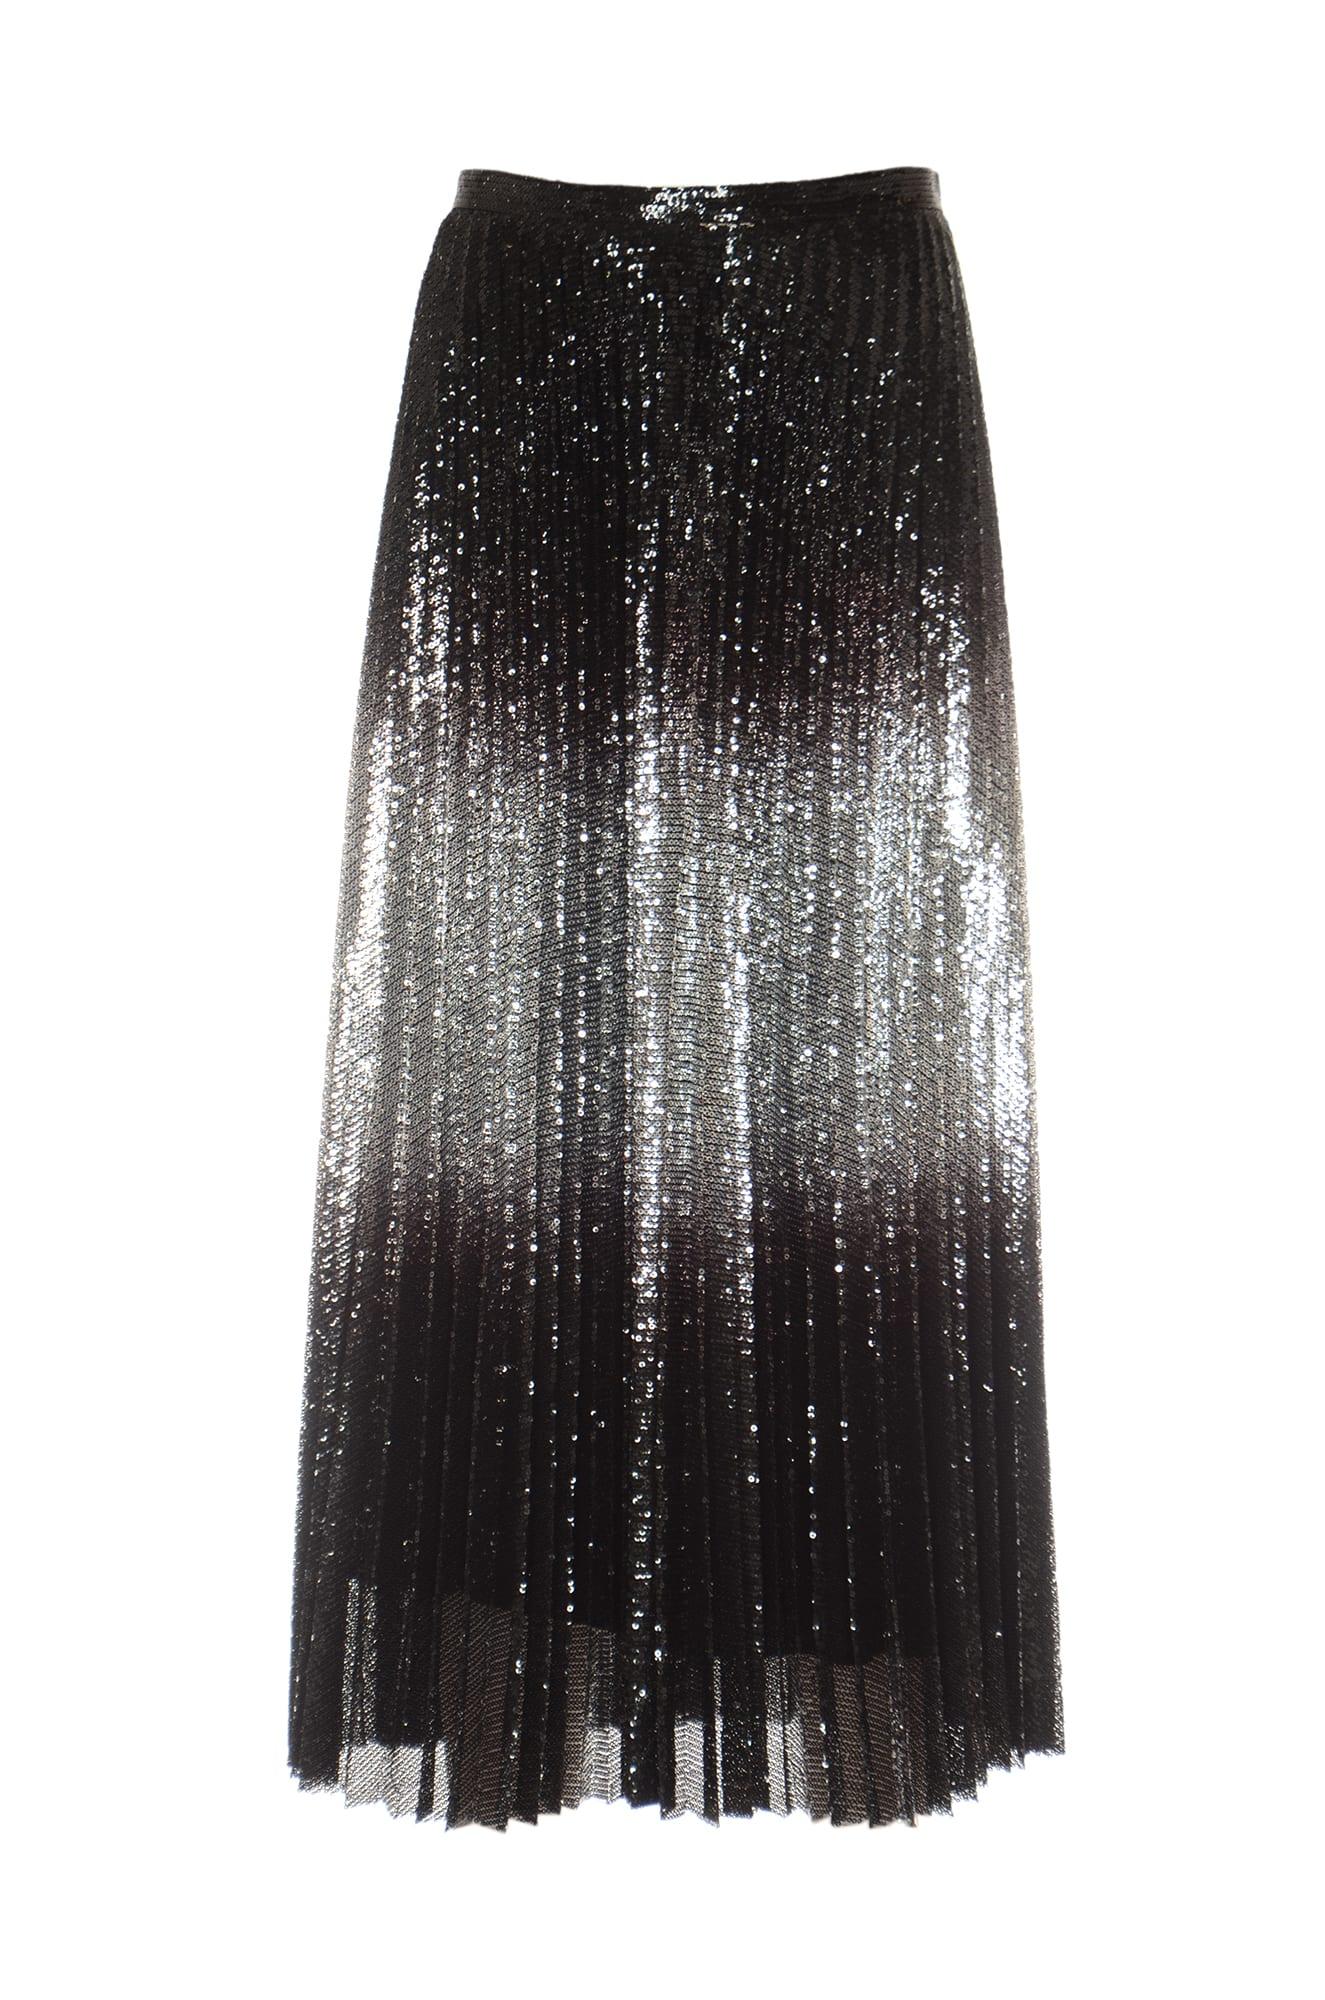 Max Mara Pianoforte Sequin Pleated Skirt in Black | Lyst